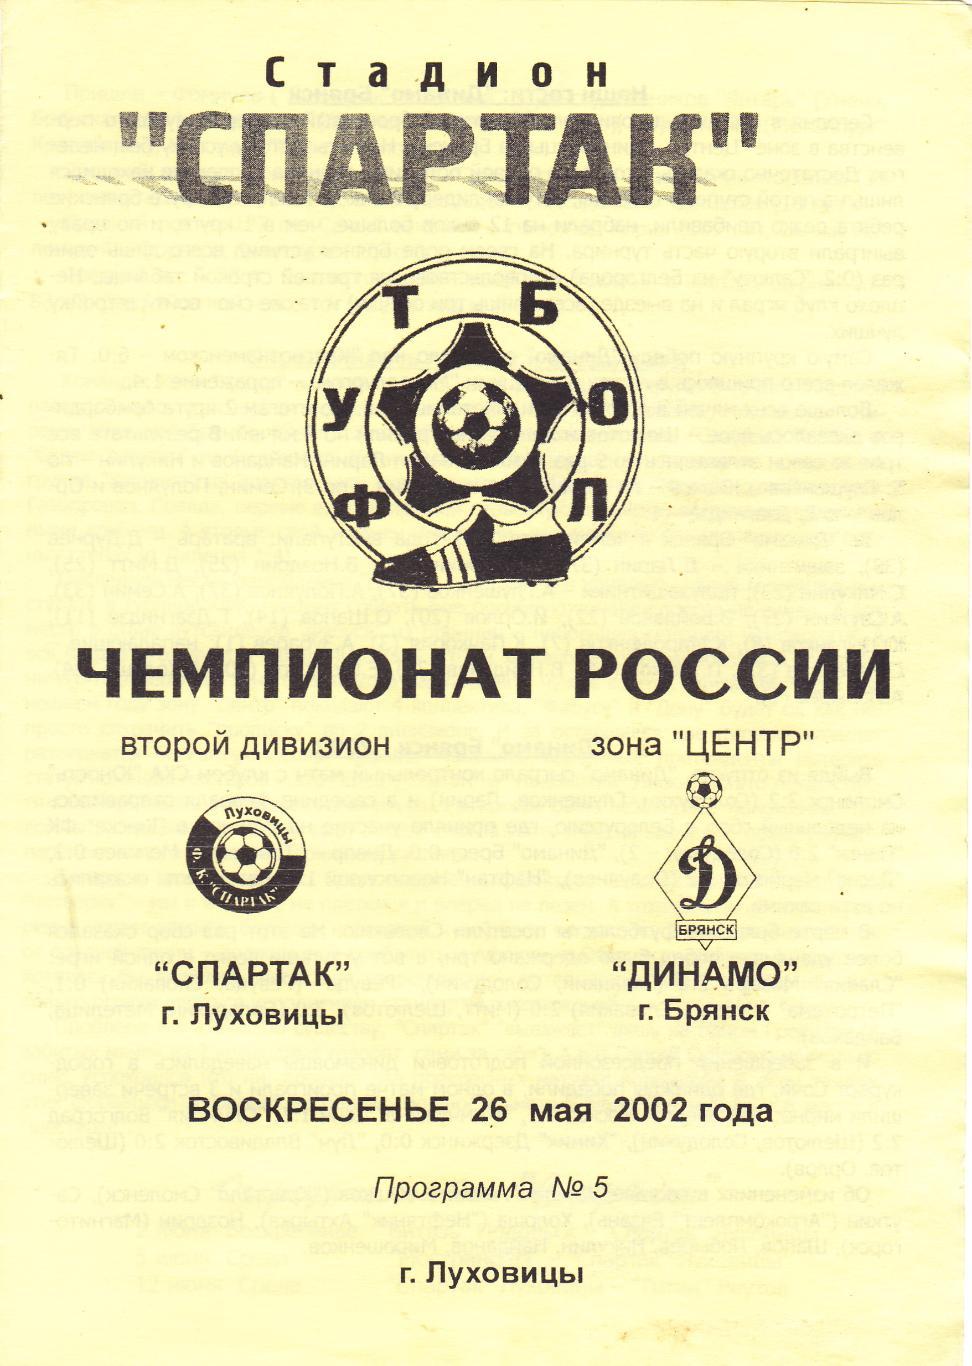 Спартак (Луховицы) - Динамо (Брянск) 26.05.2002